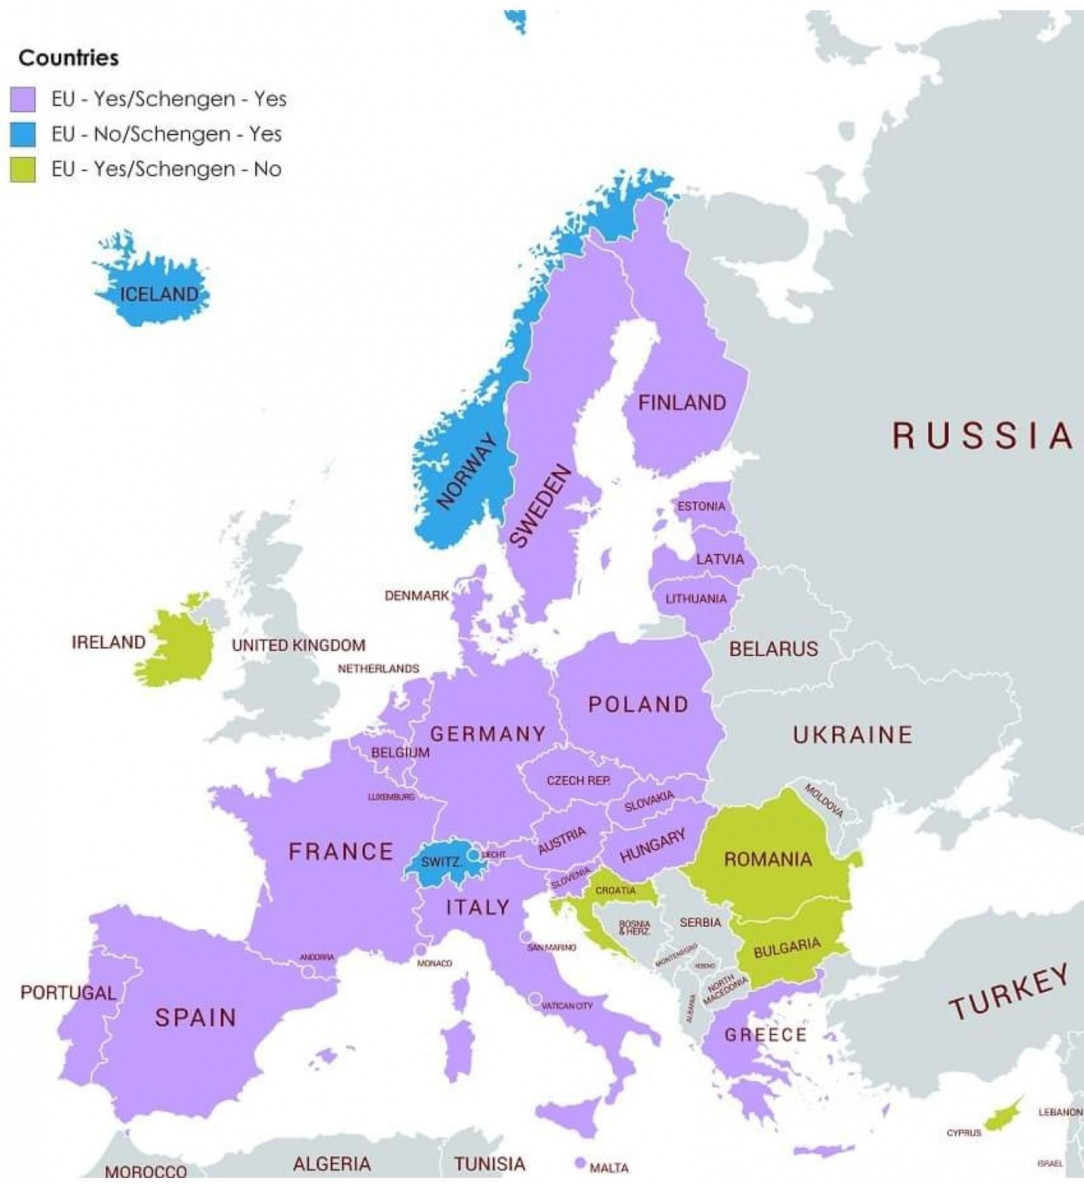 EU and Schengen status